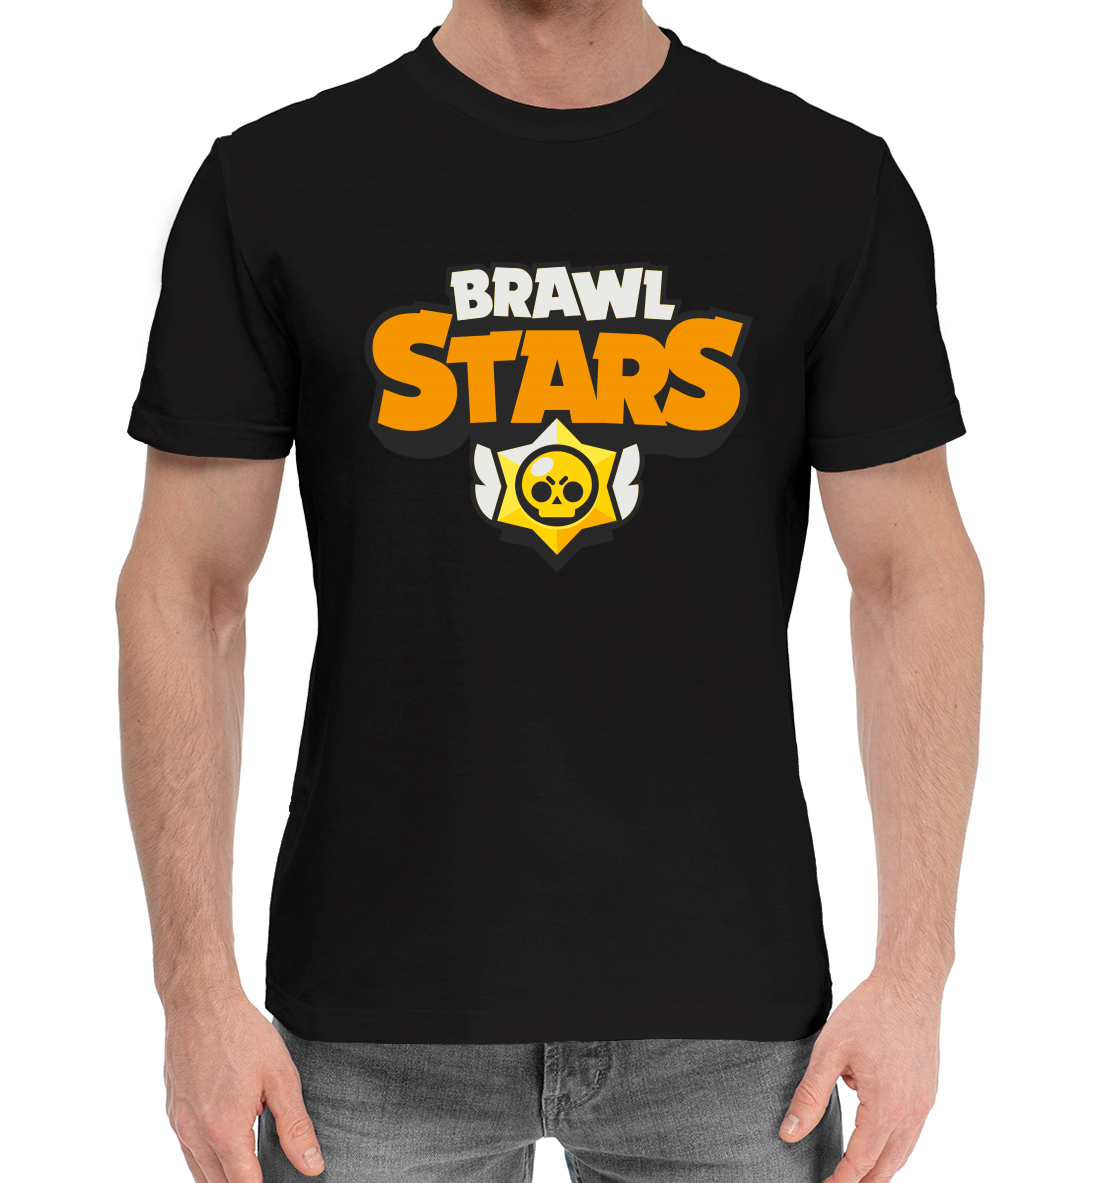 Мужская Хлопковая футболка с принтом Brawl Stars, артикул CLH-563096-hfu-2mp